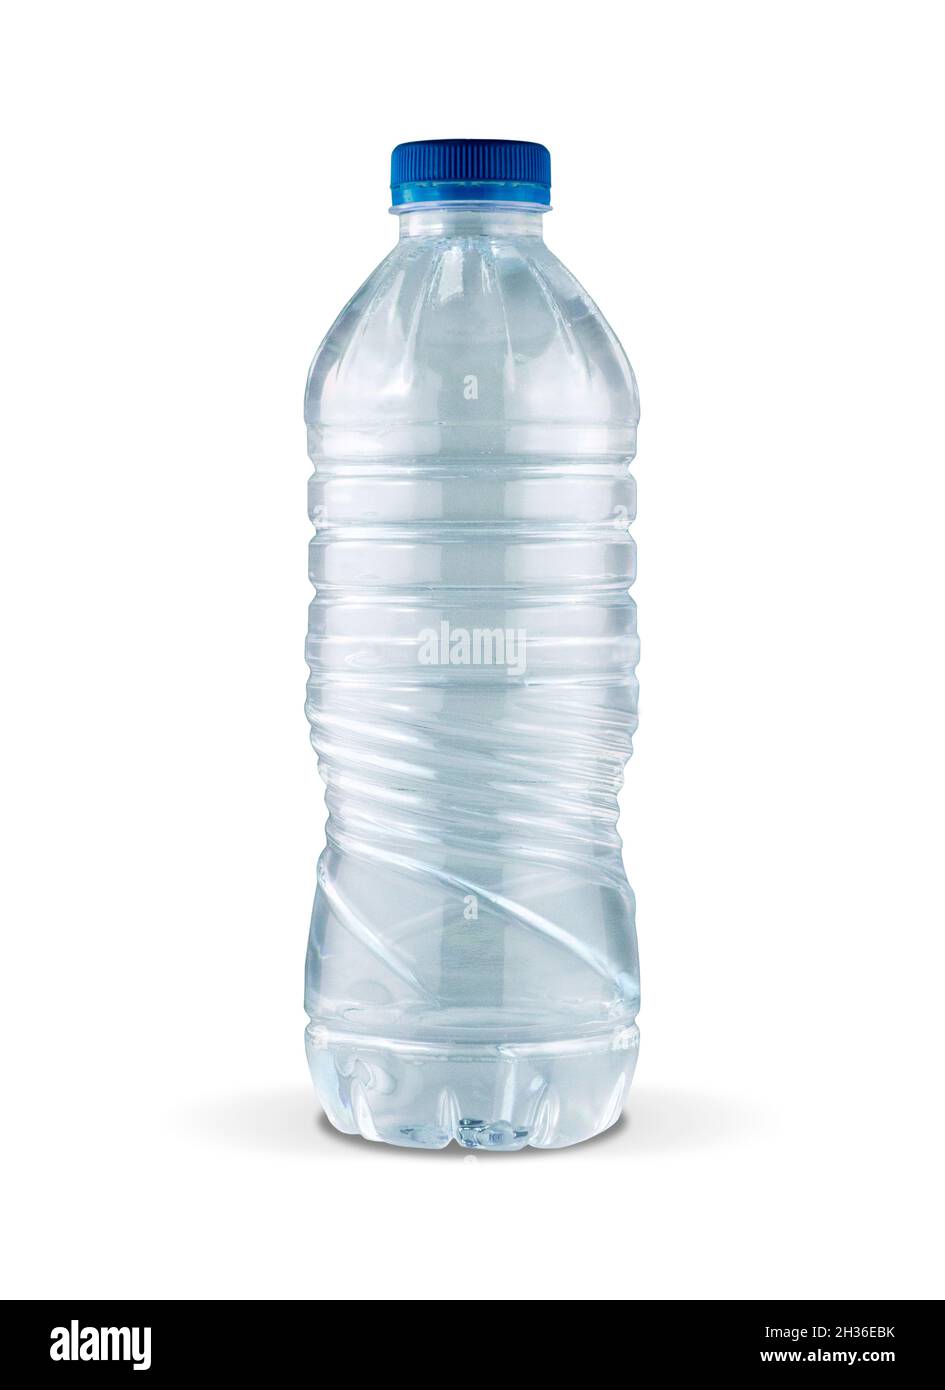 https://c8.alamy.com/comp/2H36EBK/plastic-water-bottle-with-no-label-on-white-background-2H36EBK.jpg